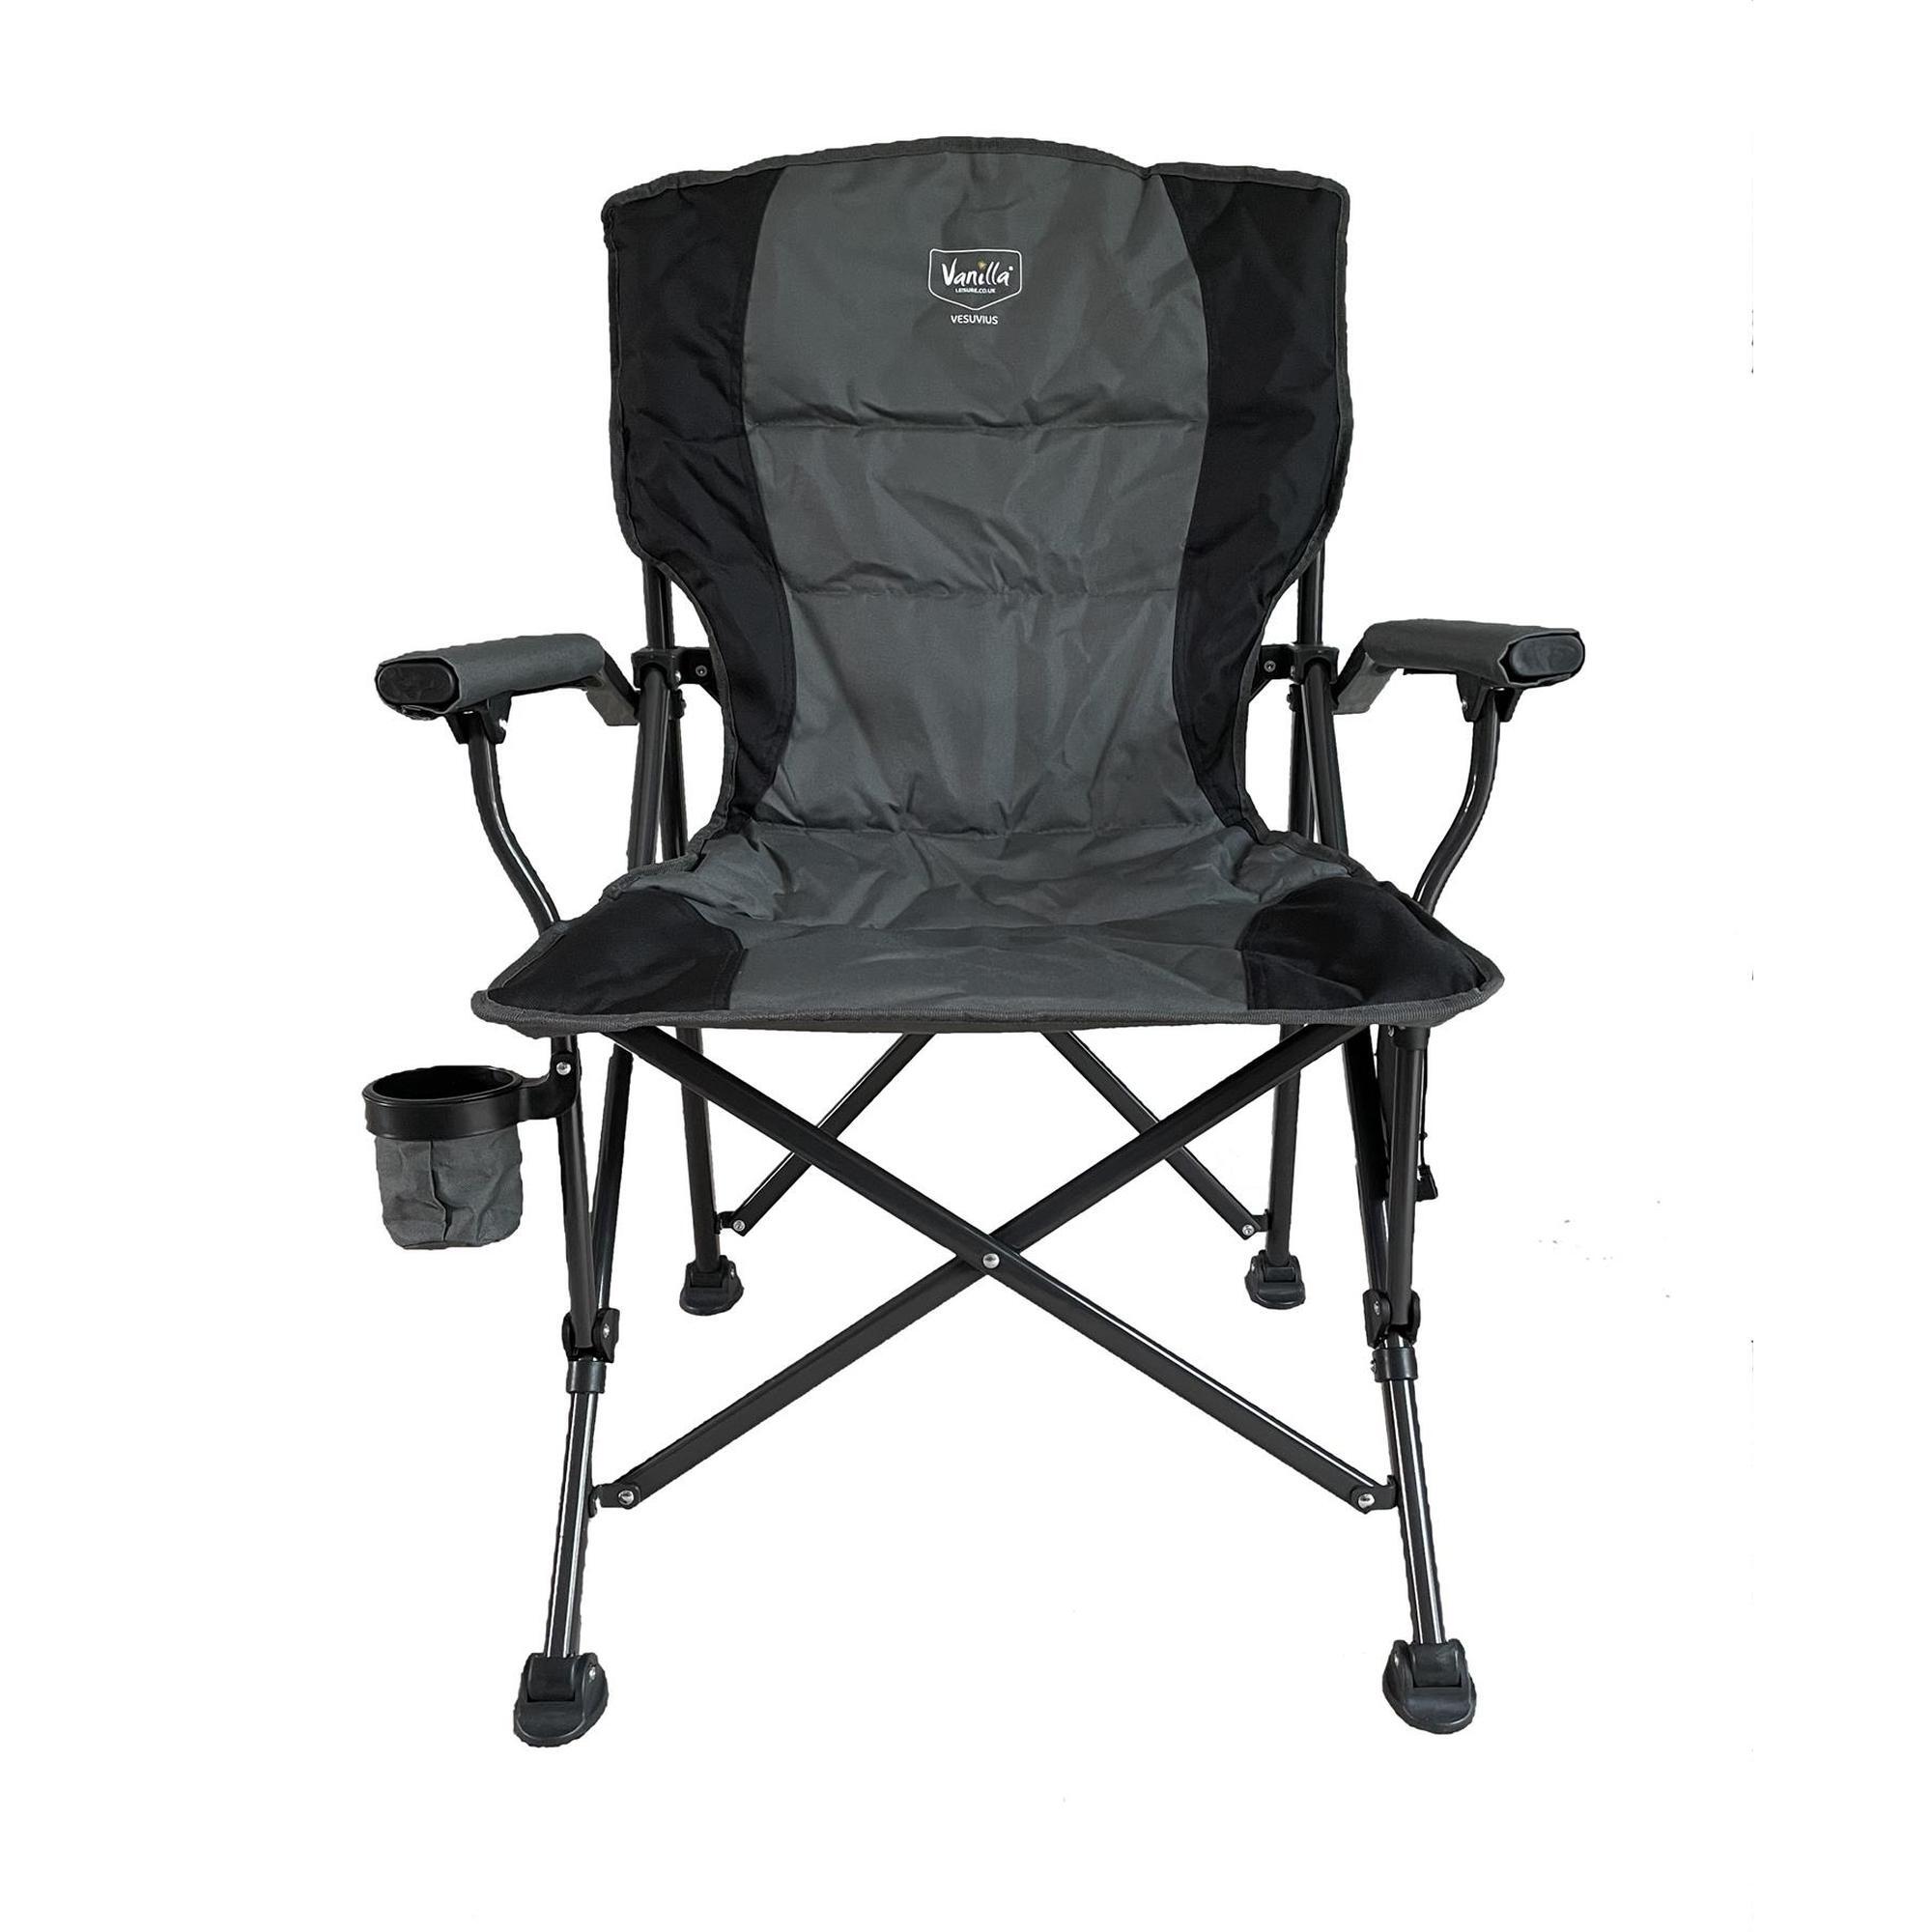 VANILLA LEISURE Vanilla Leisure Vesuvius Folding Heated Camping Chair + FREE Power Bank